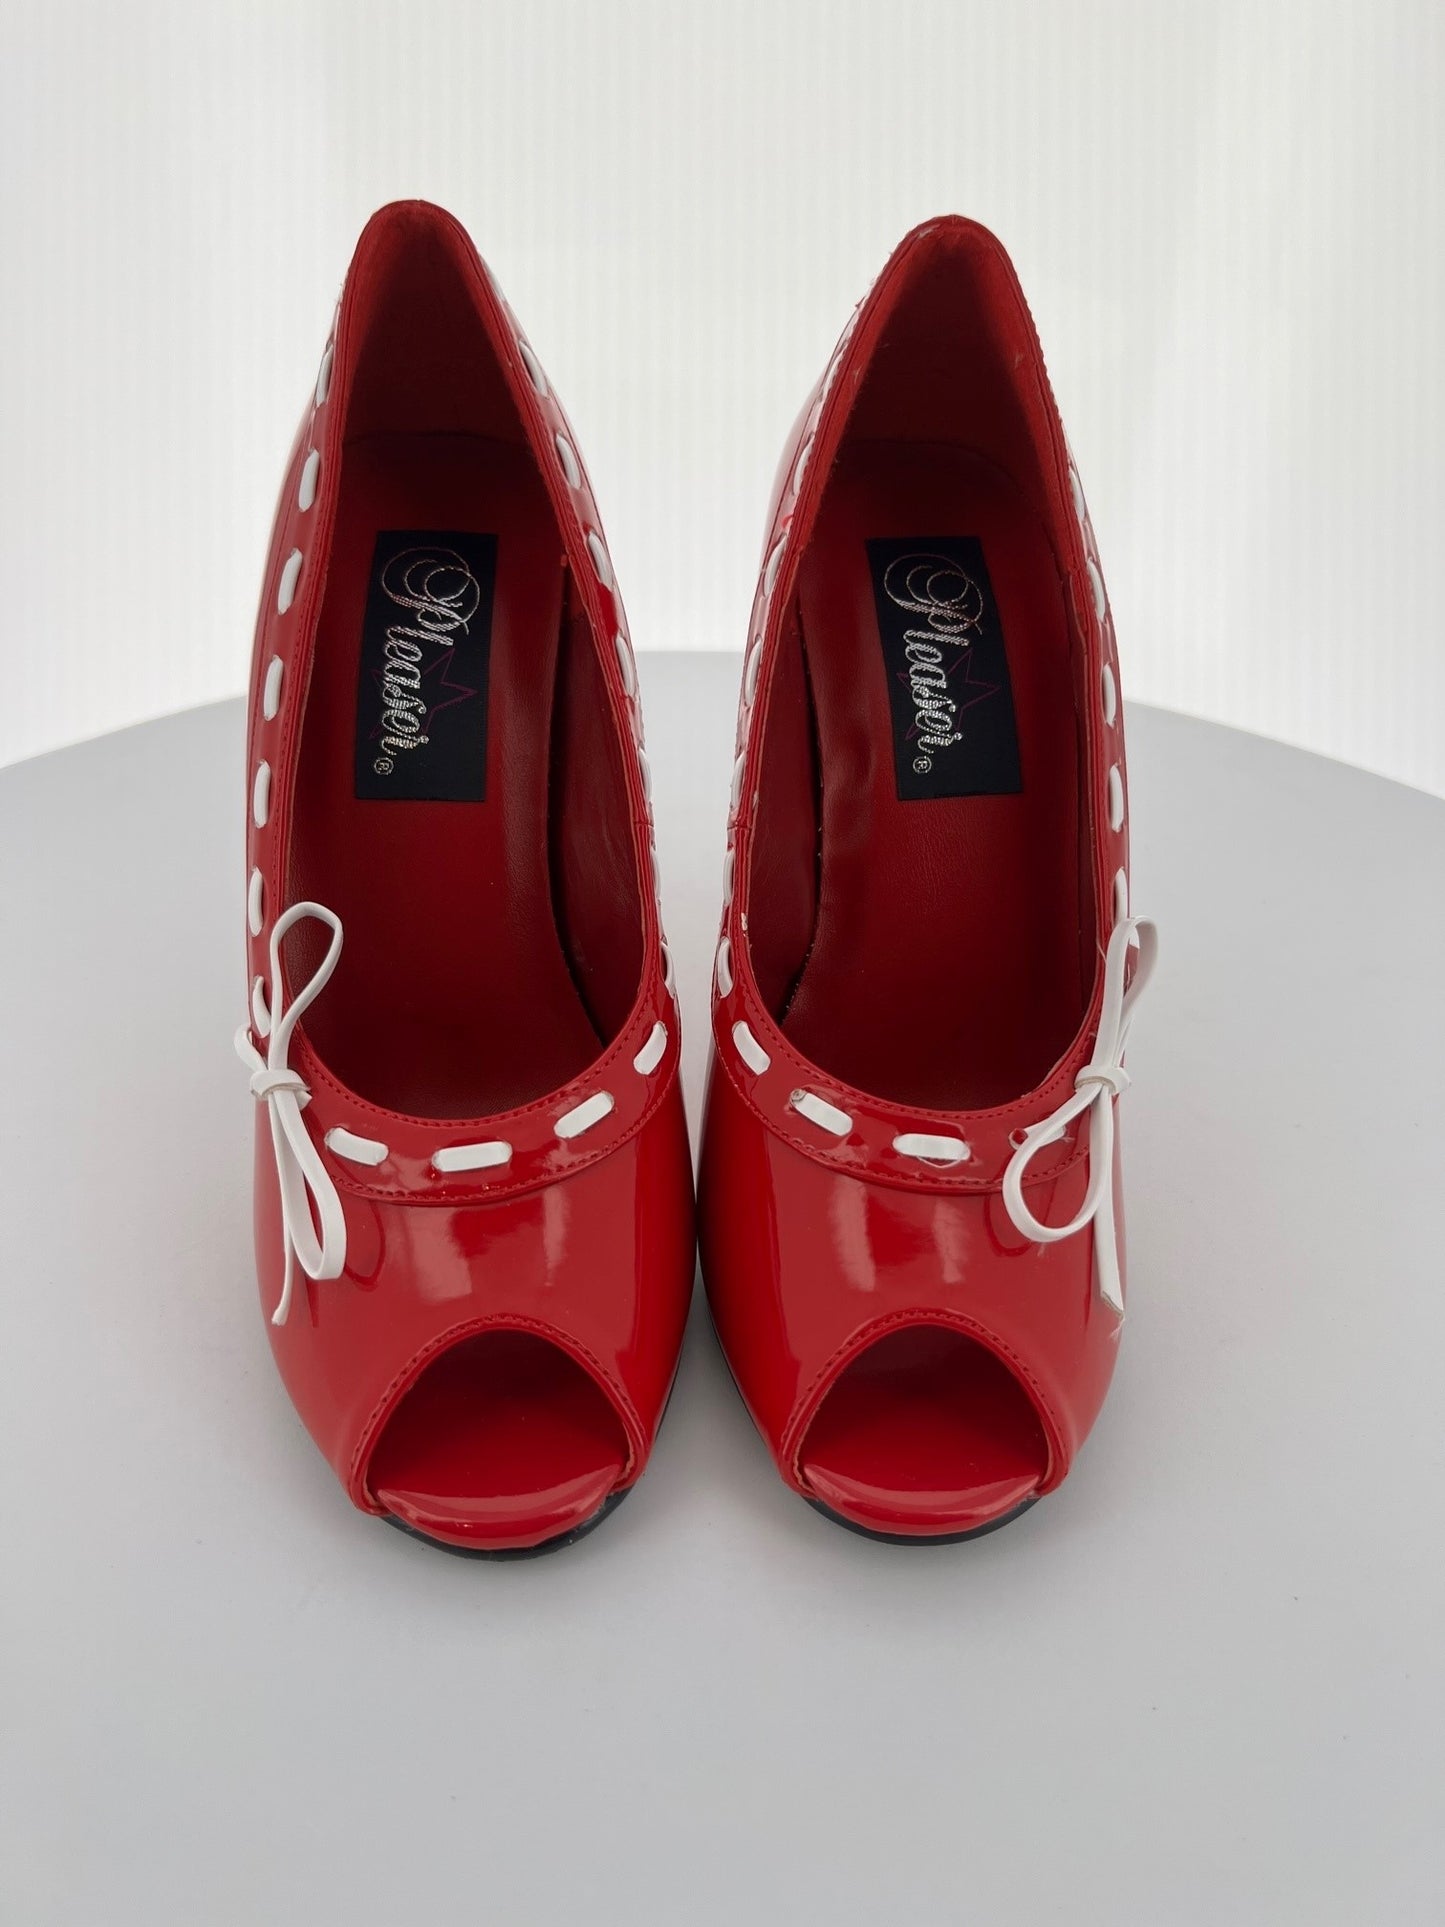 SEDUCE-219 Pleaser Red/Wht Patent High Heel Alternative Footwear Discontinued Sale Stock